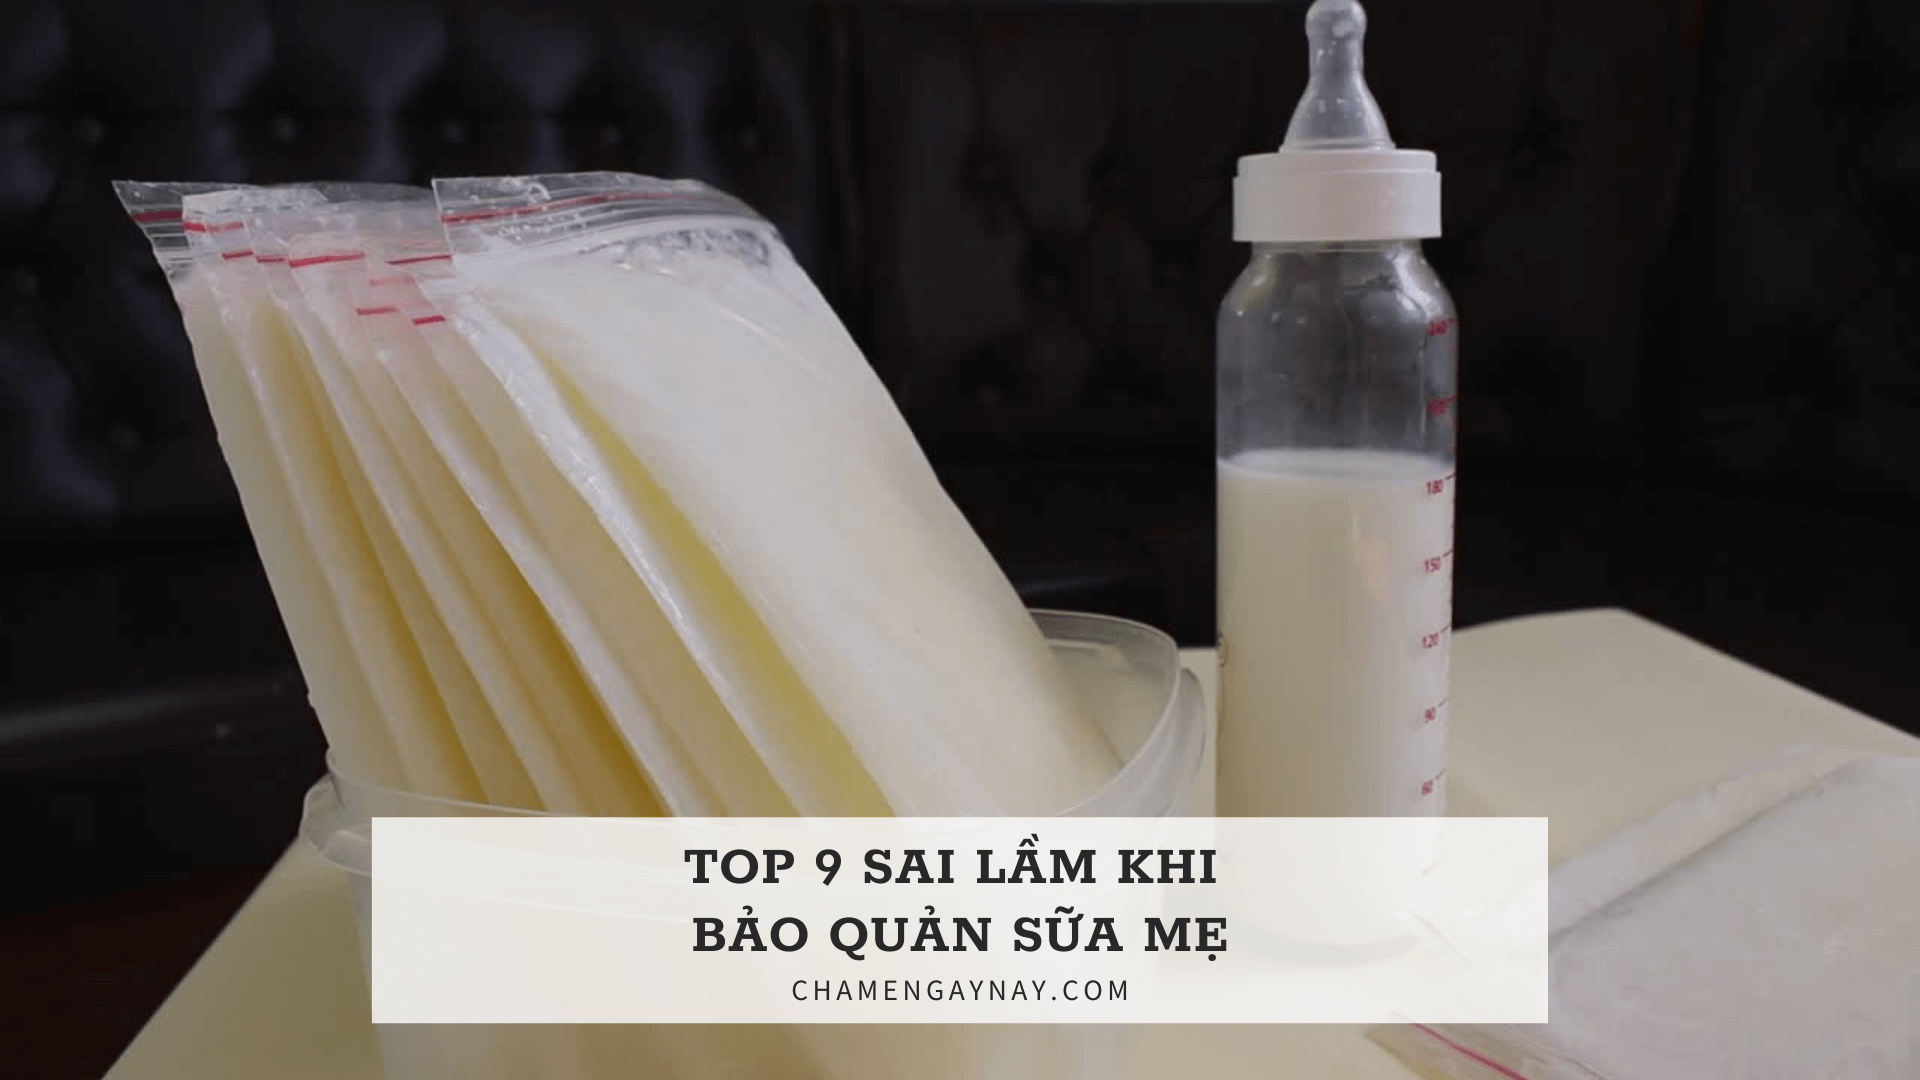 Top 9 sai lầm khi bảo quản sữa mẹ